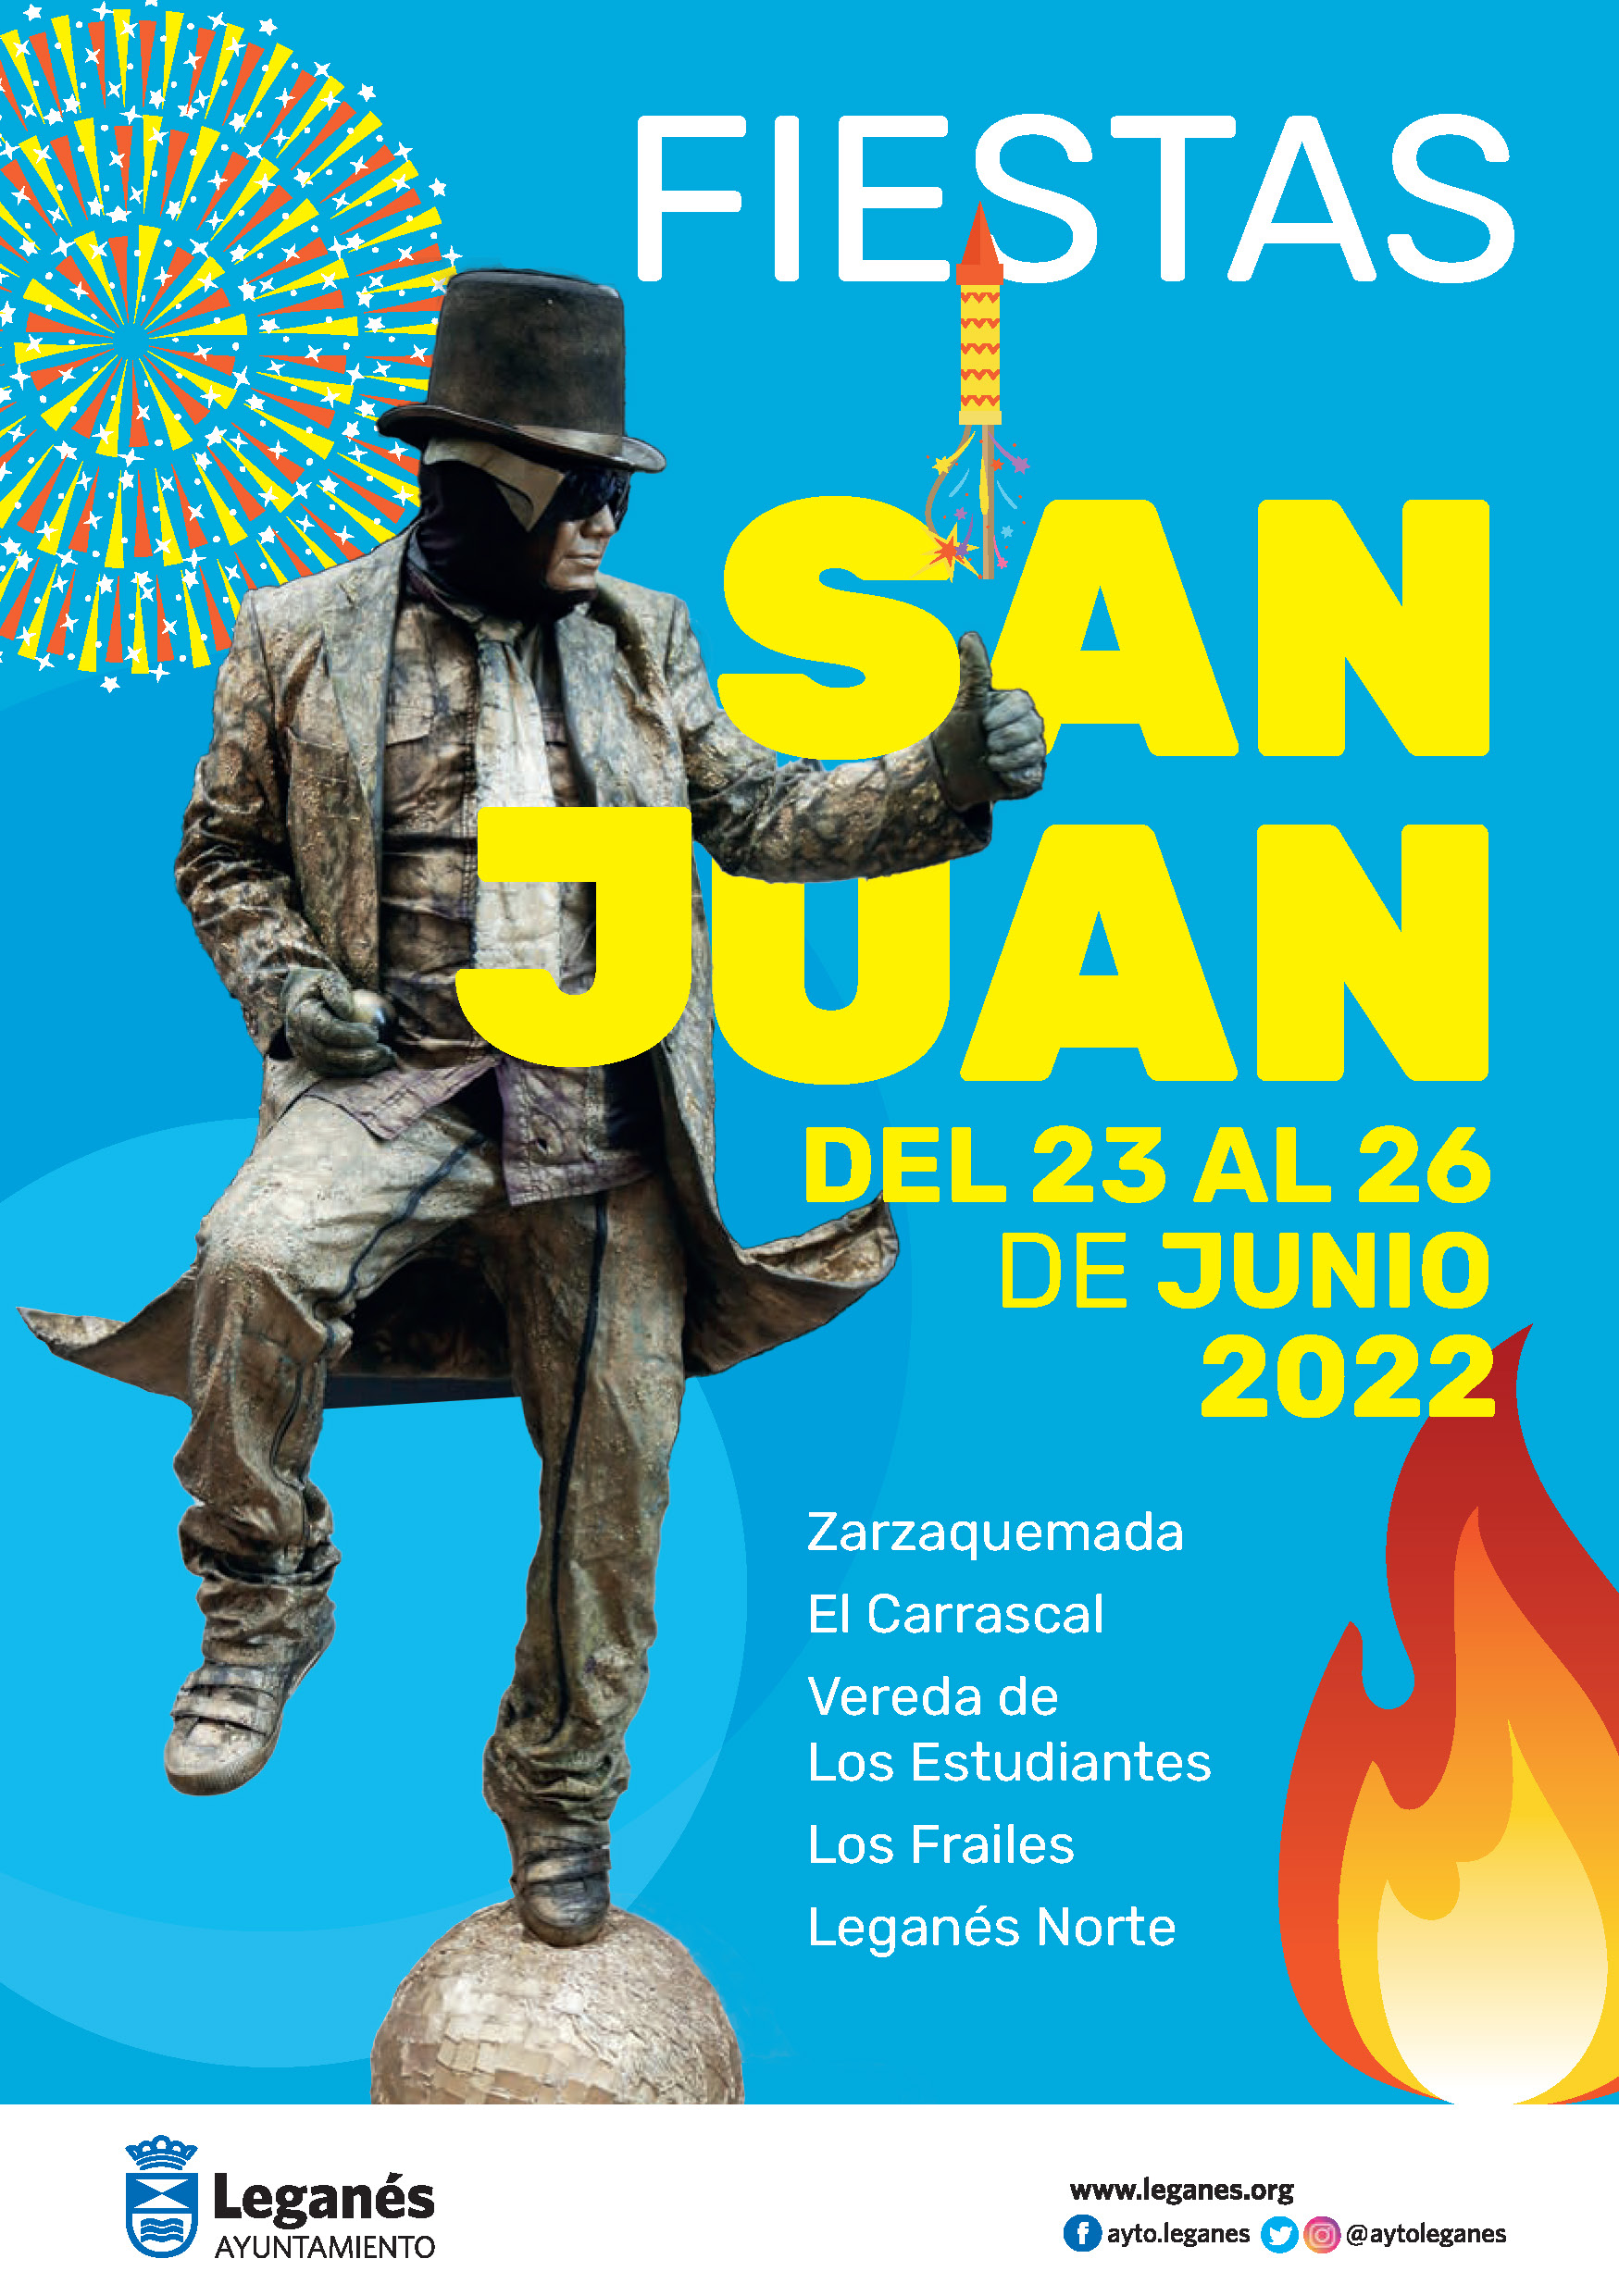 Programa FIESTAS DE SAN JUAN 2022 en Leganés.